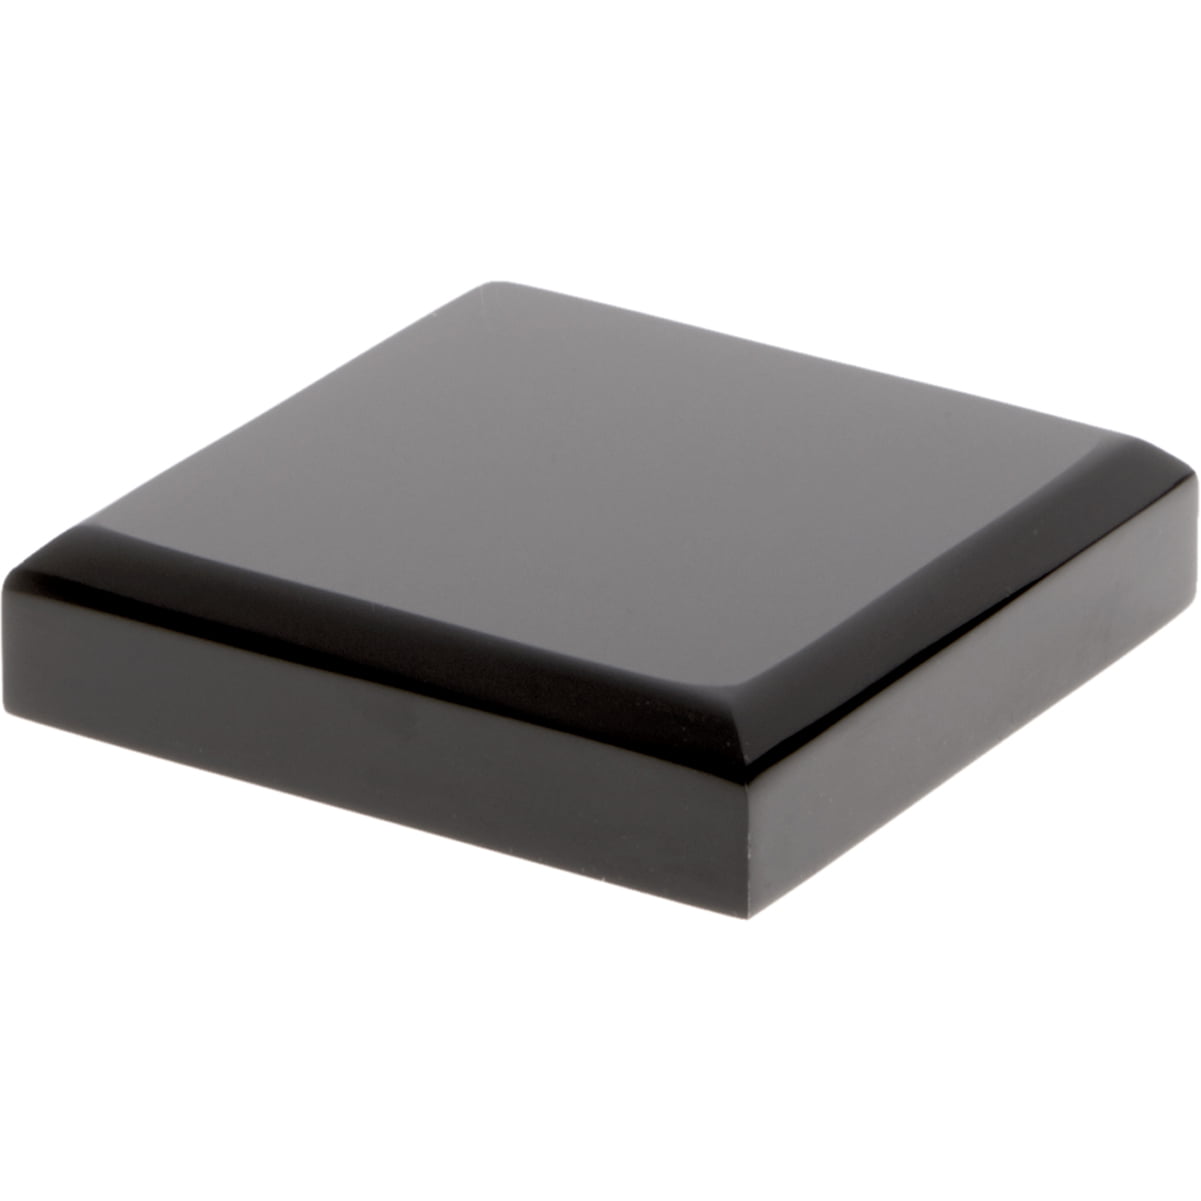 Plymor Black Acrylic Square Beveled Display Base, 3